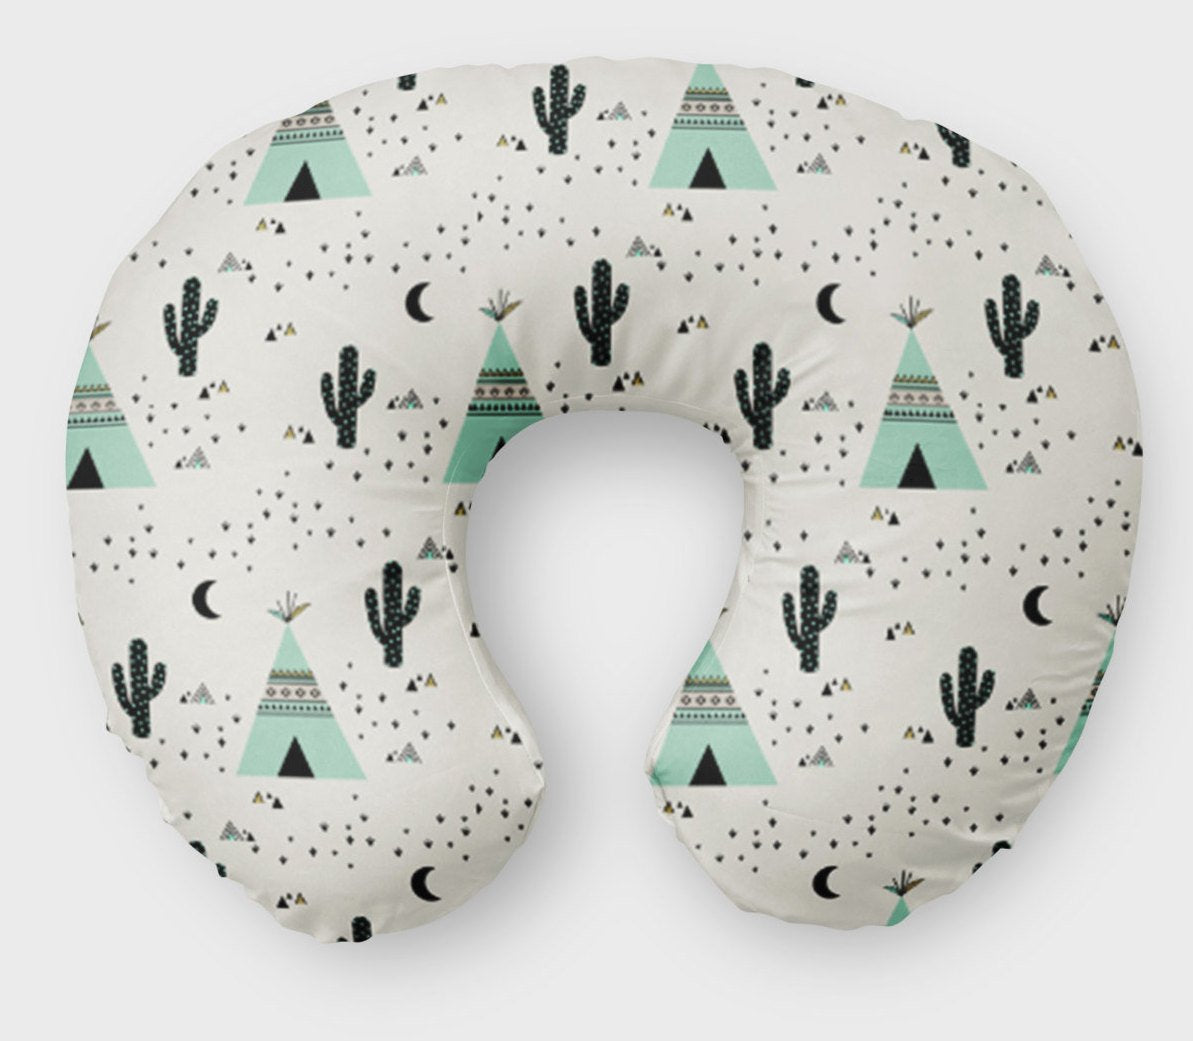 cactus boppy pillow